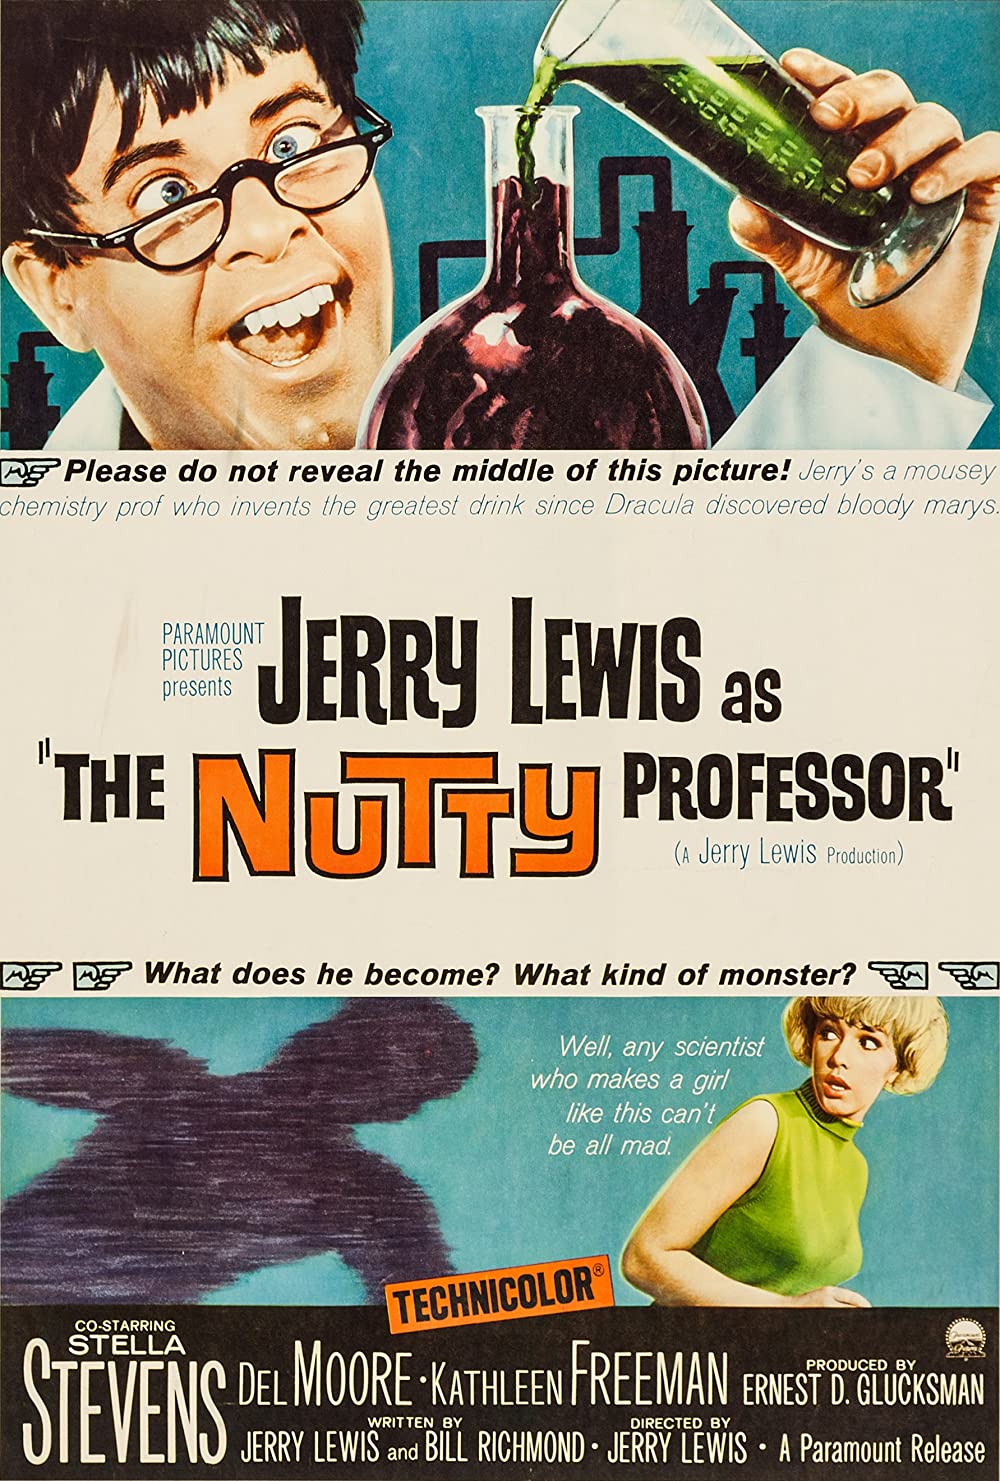 Filmbeschreibung zu Der verrückte Professor (1963)